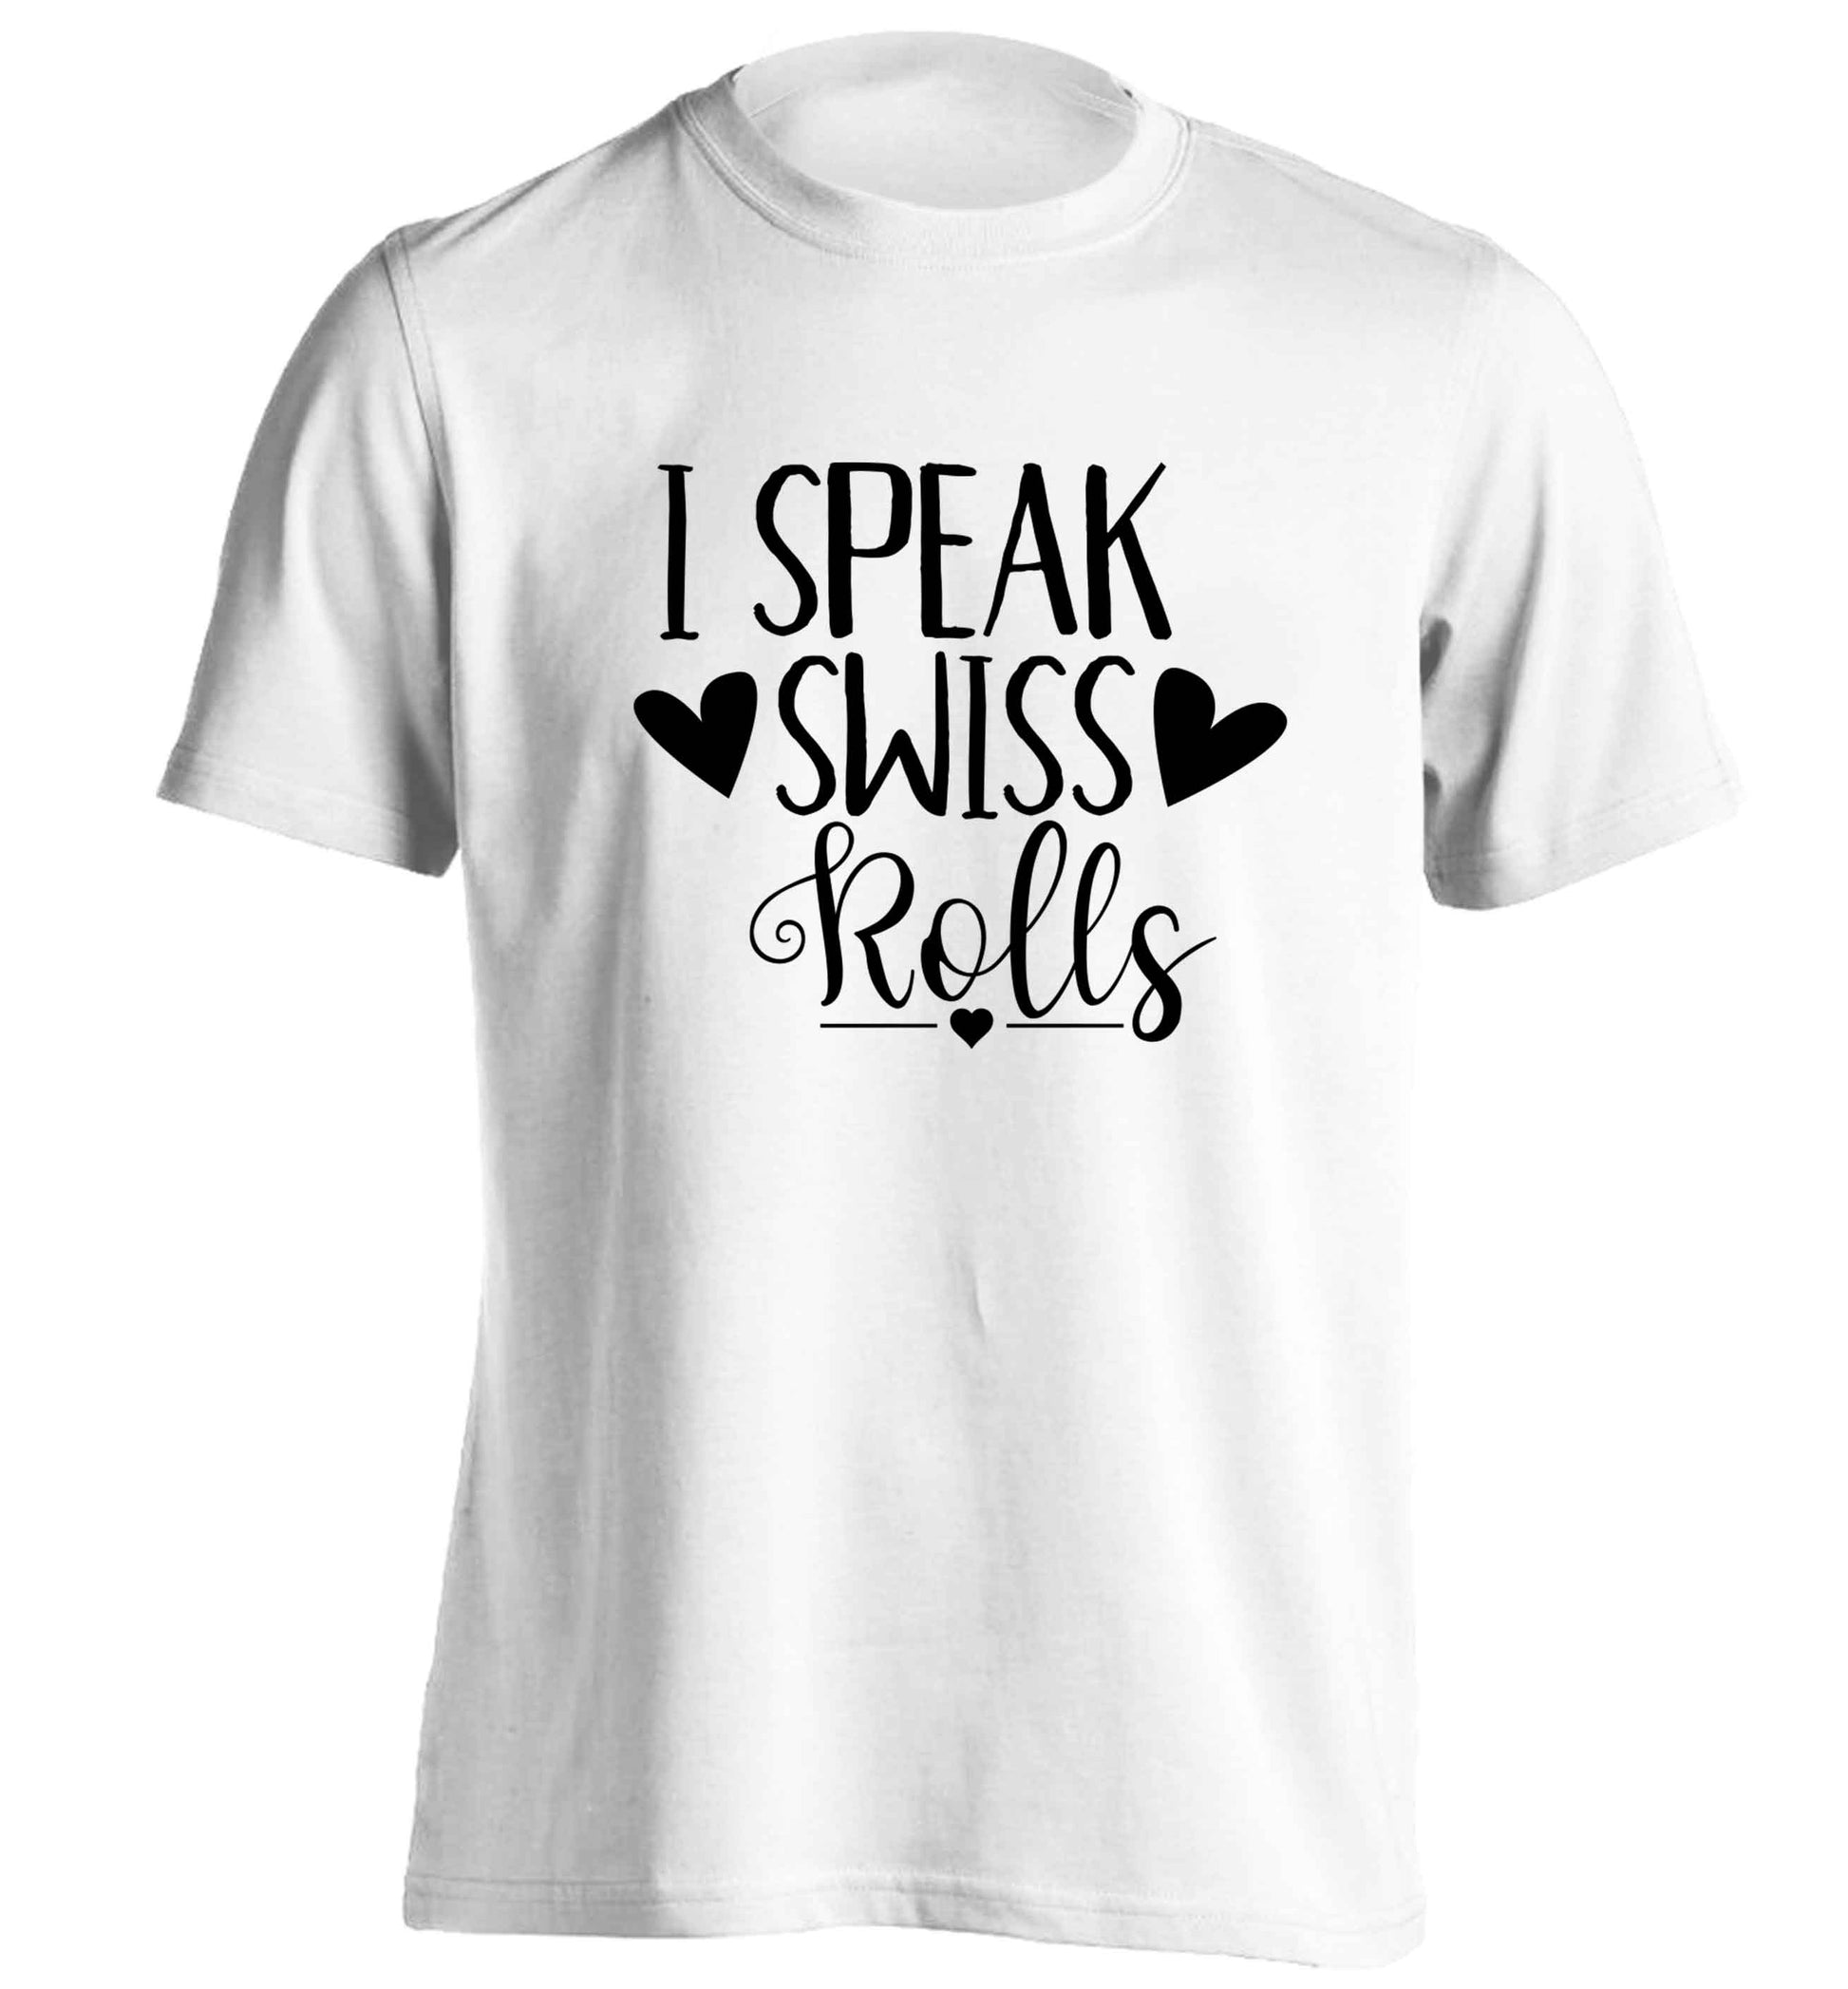 I speak swiss..rolls adults unisex white Tshirt 2XL